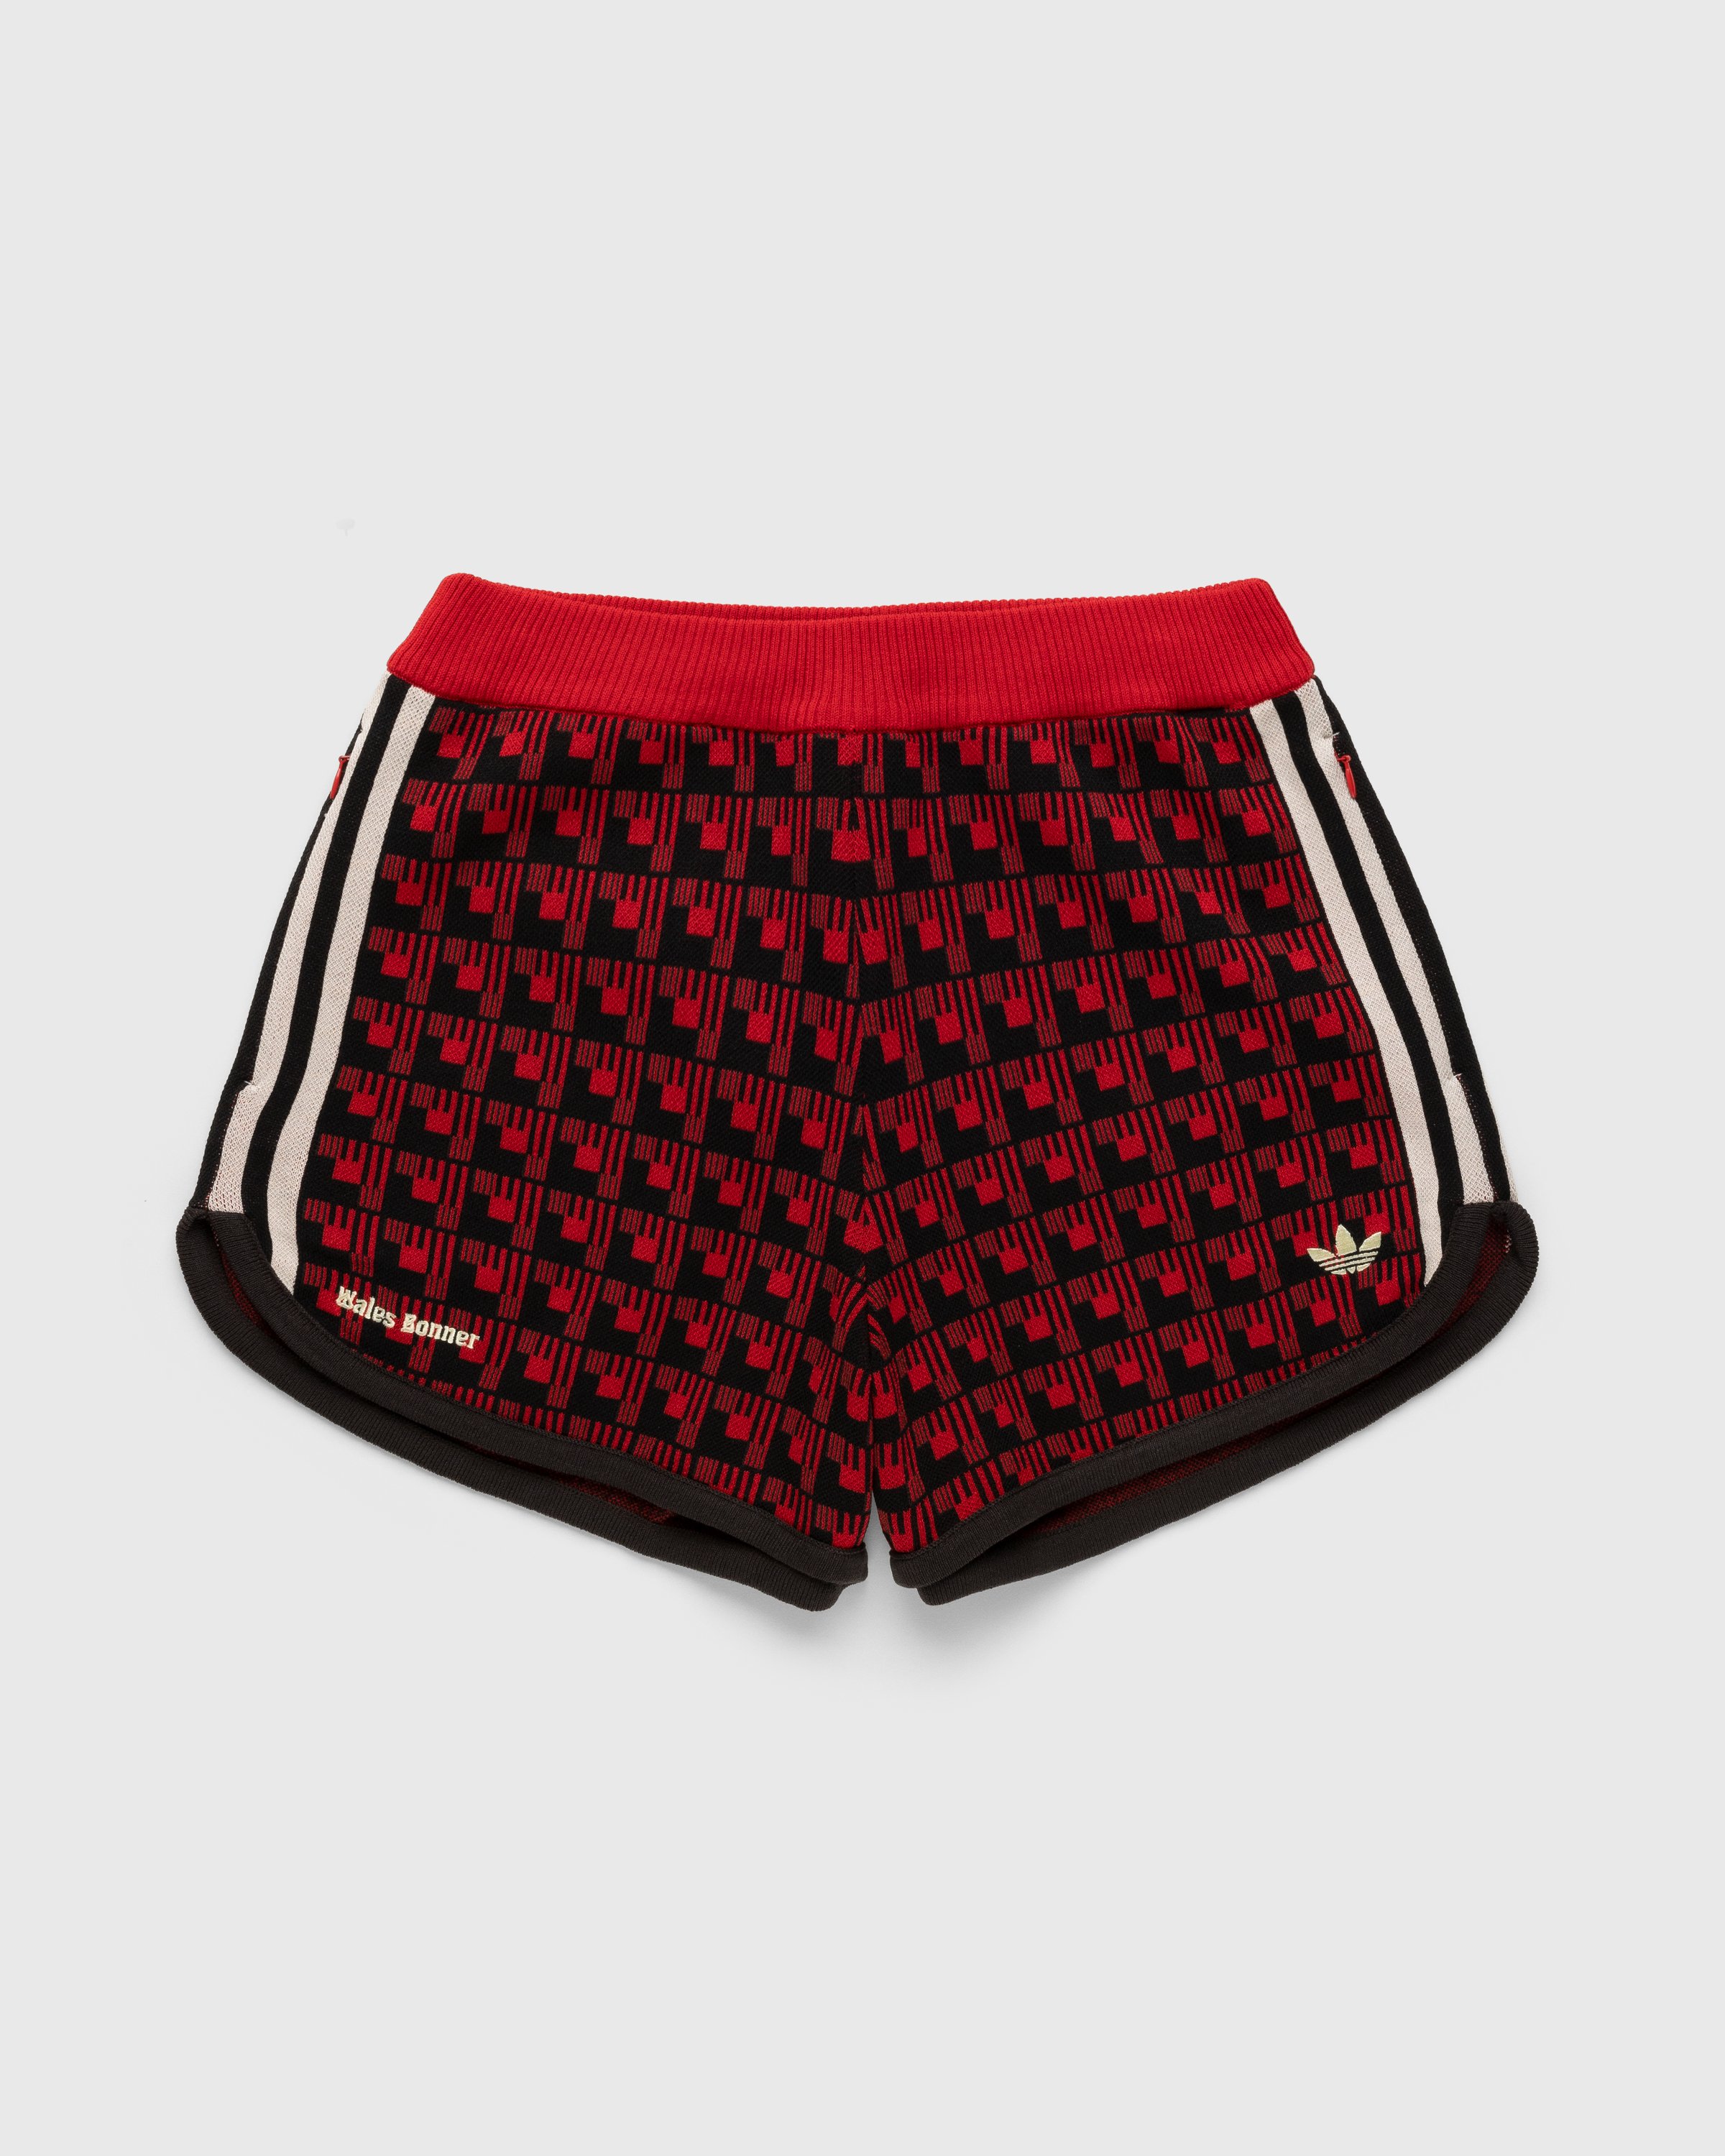 Adidas x Wales Bonner - WB Knit Shorts Scarlet/Black - Clothing - Red - Image 1